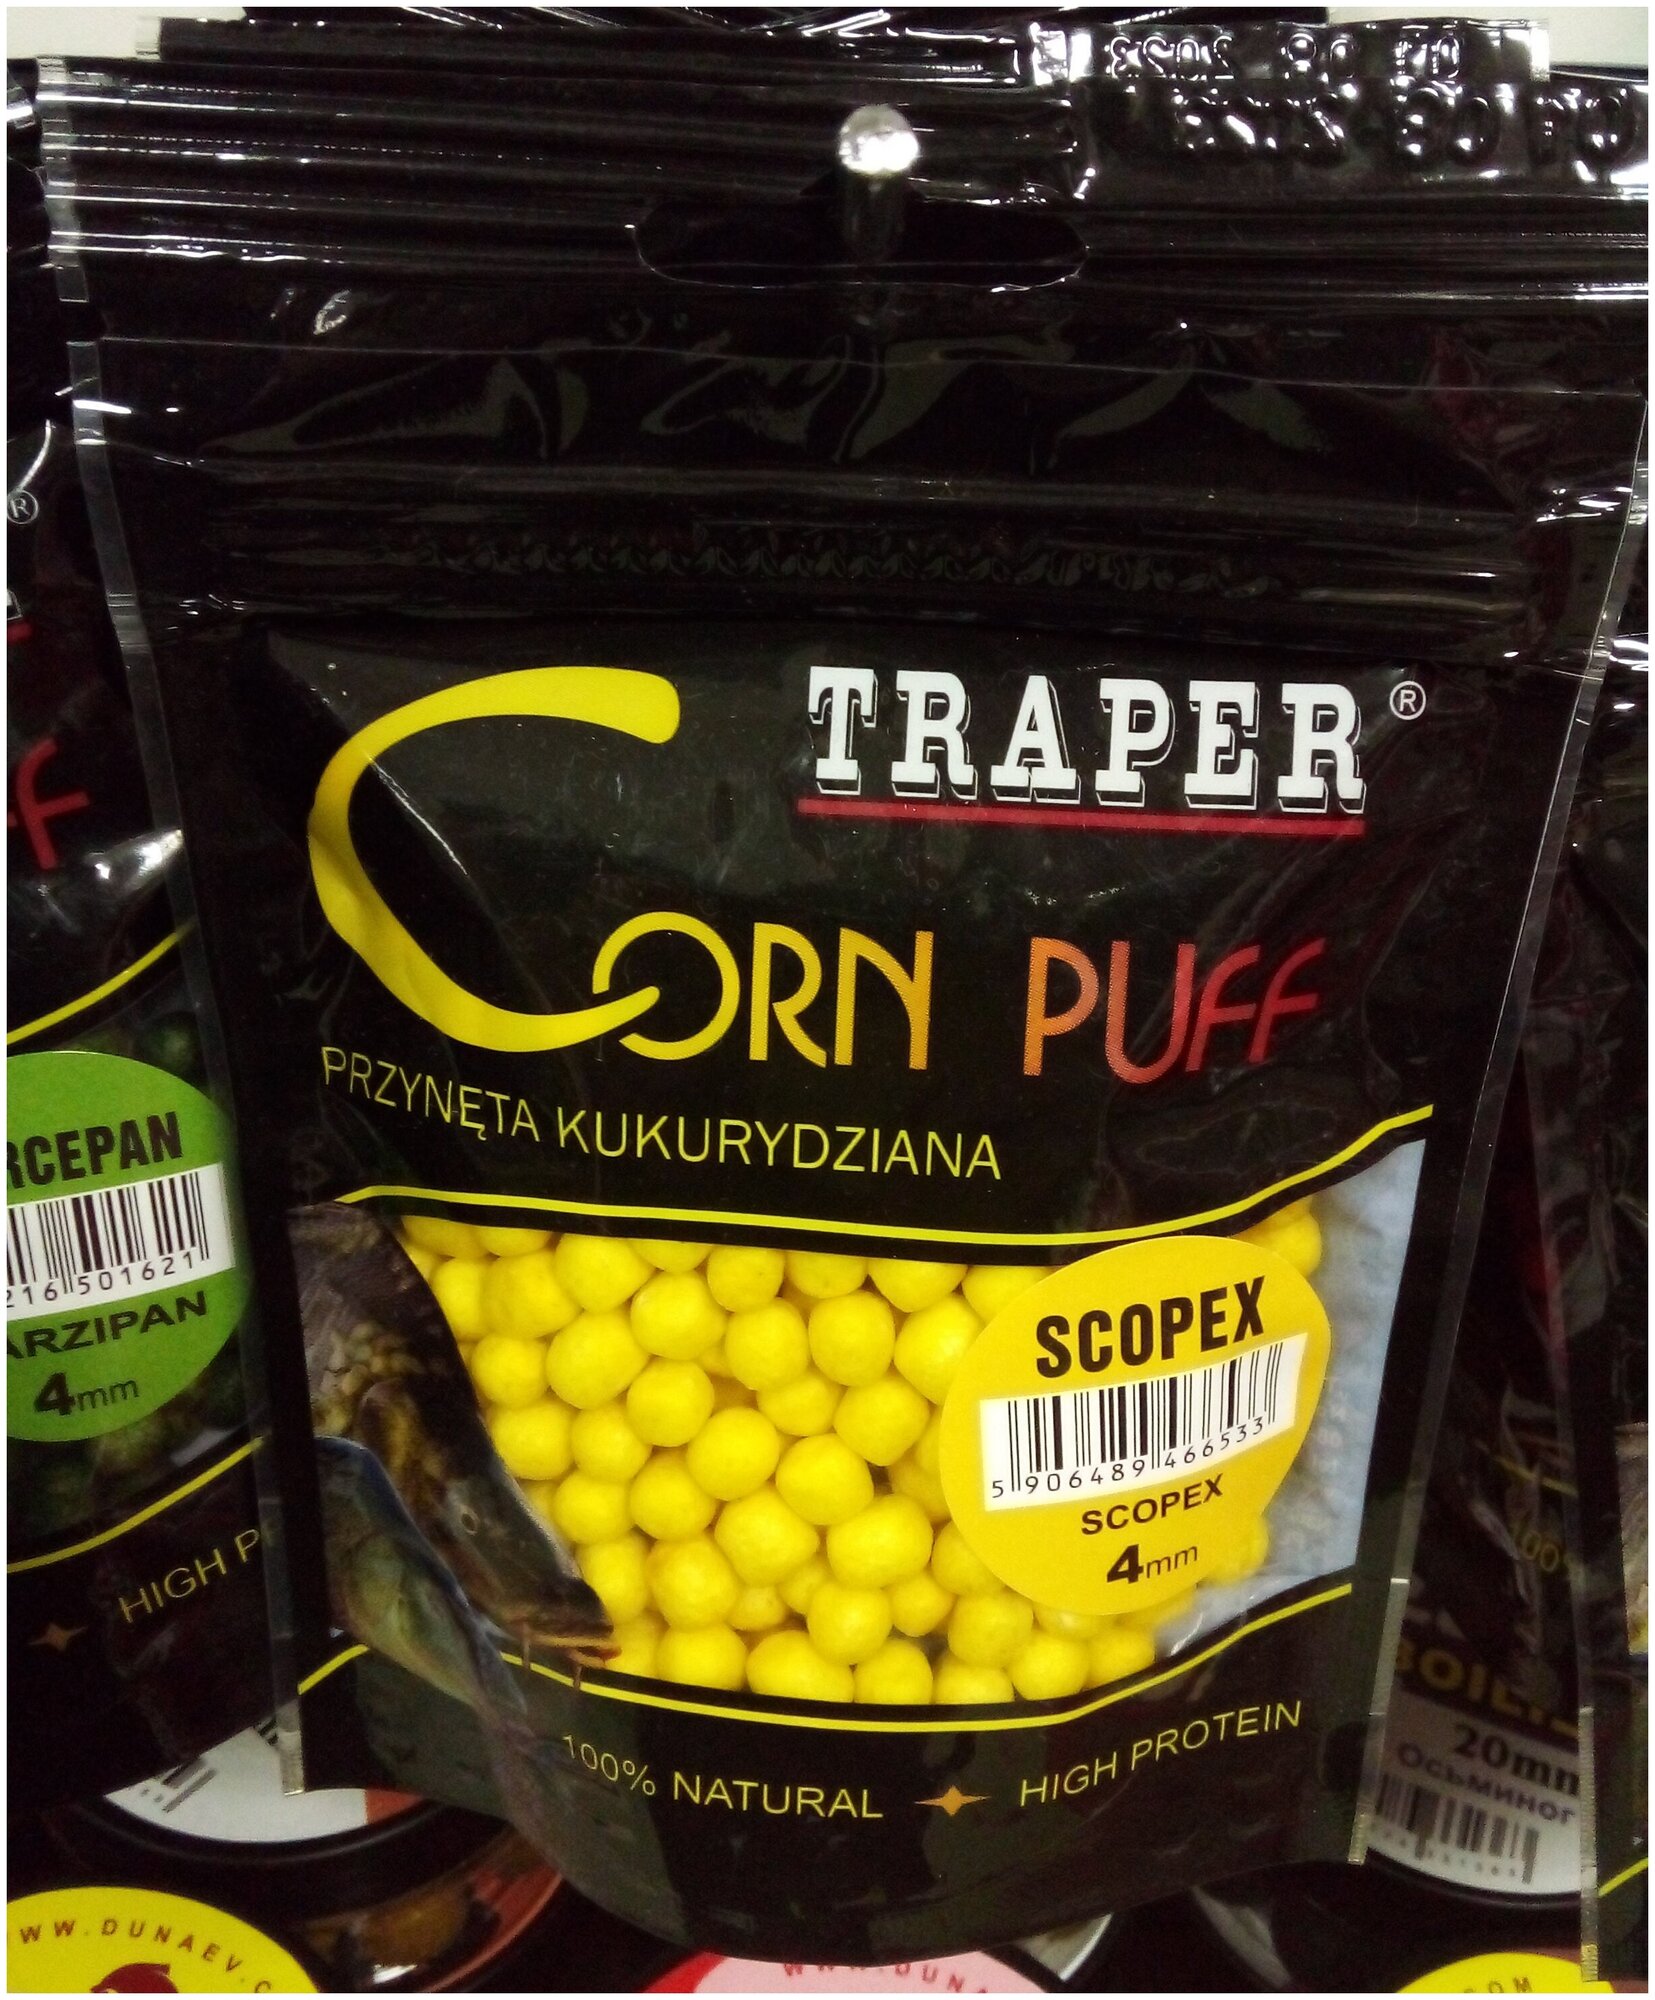 Кукуруза воздушная Traper Corn Puff Scopex (Скопекс) 4 mm x 20 g